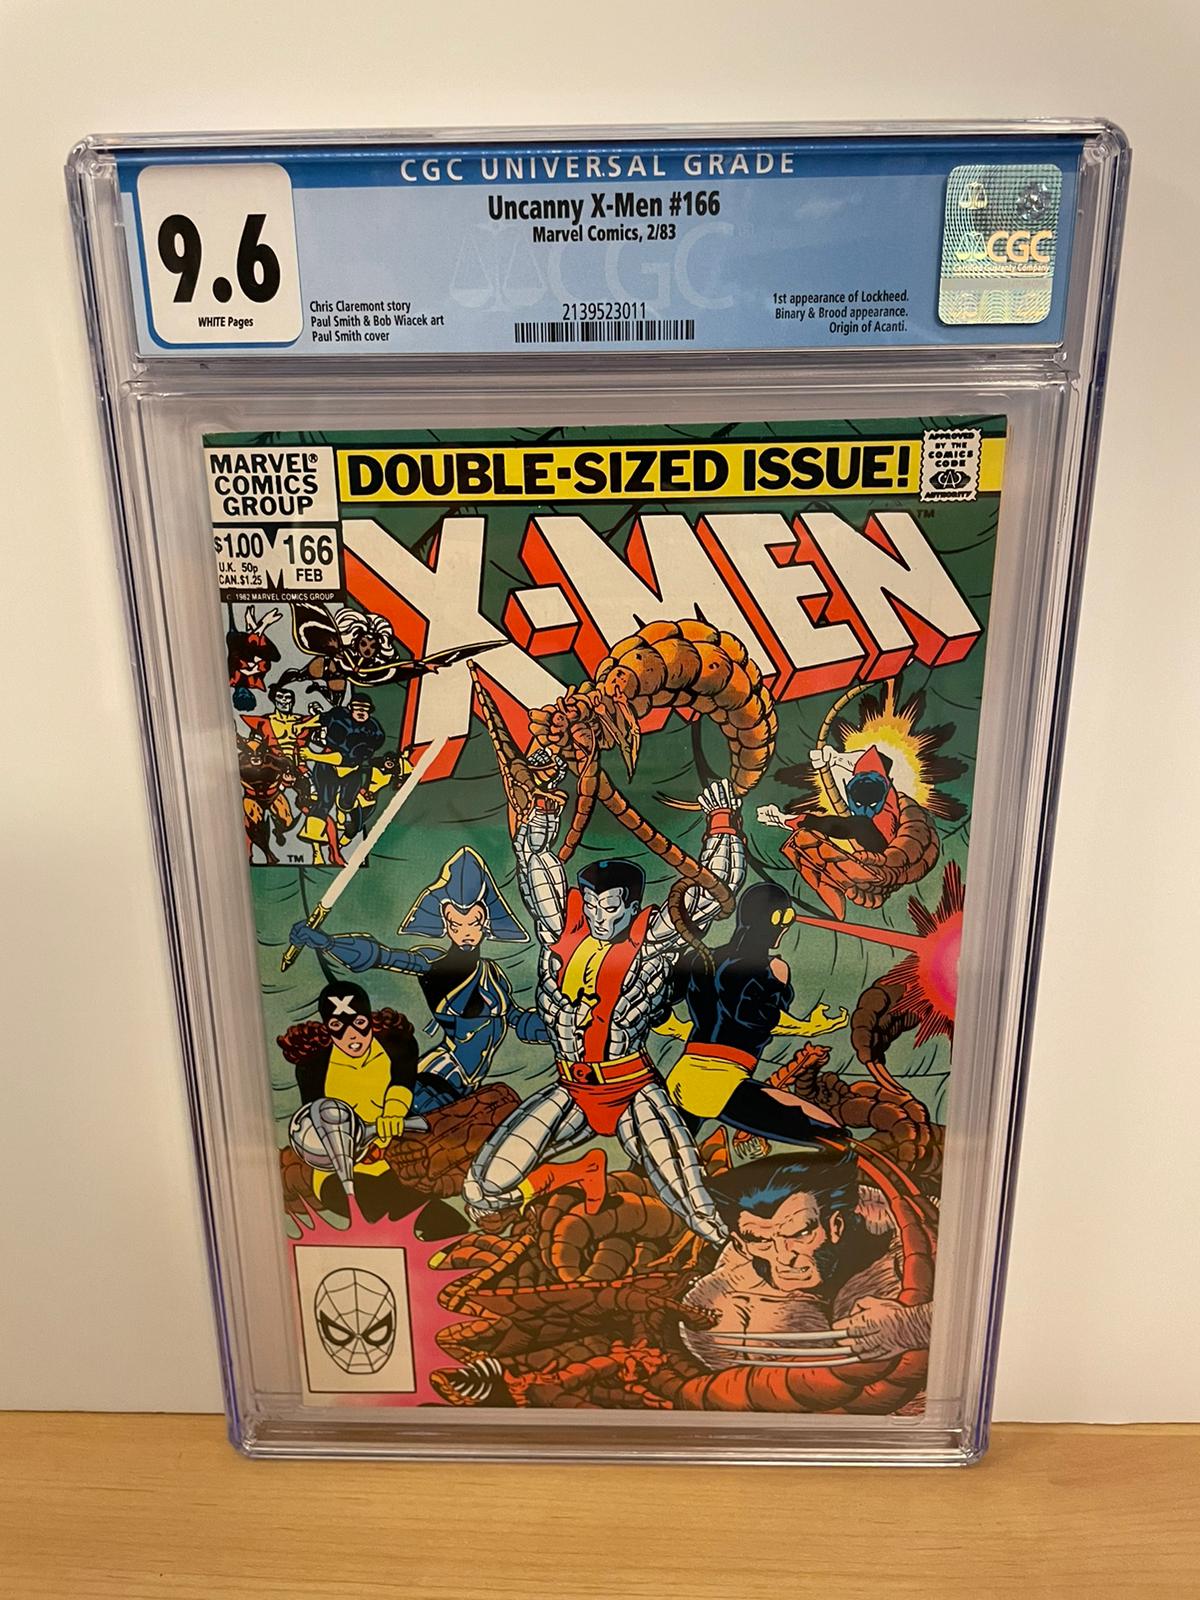 Uncanny X-Men, Vol. 1 #166 - CGC 9.6 (WP) - 1st Appearance of Lockheed